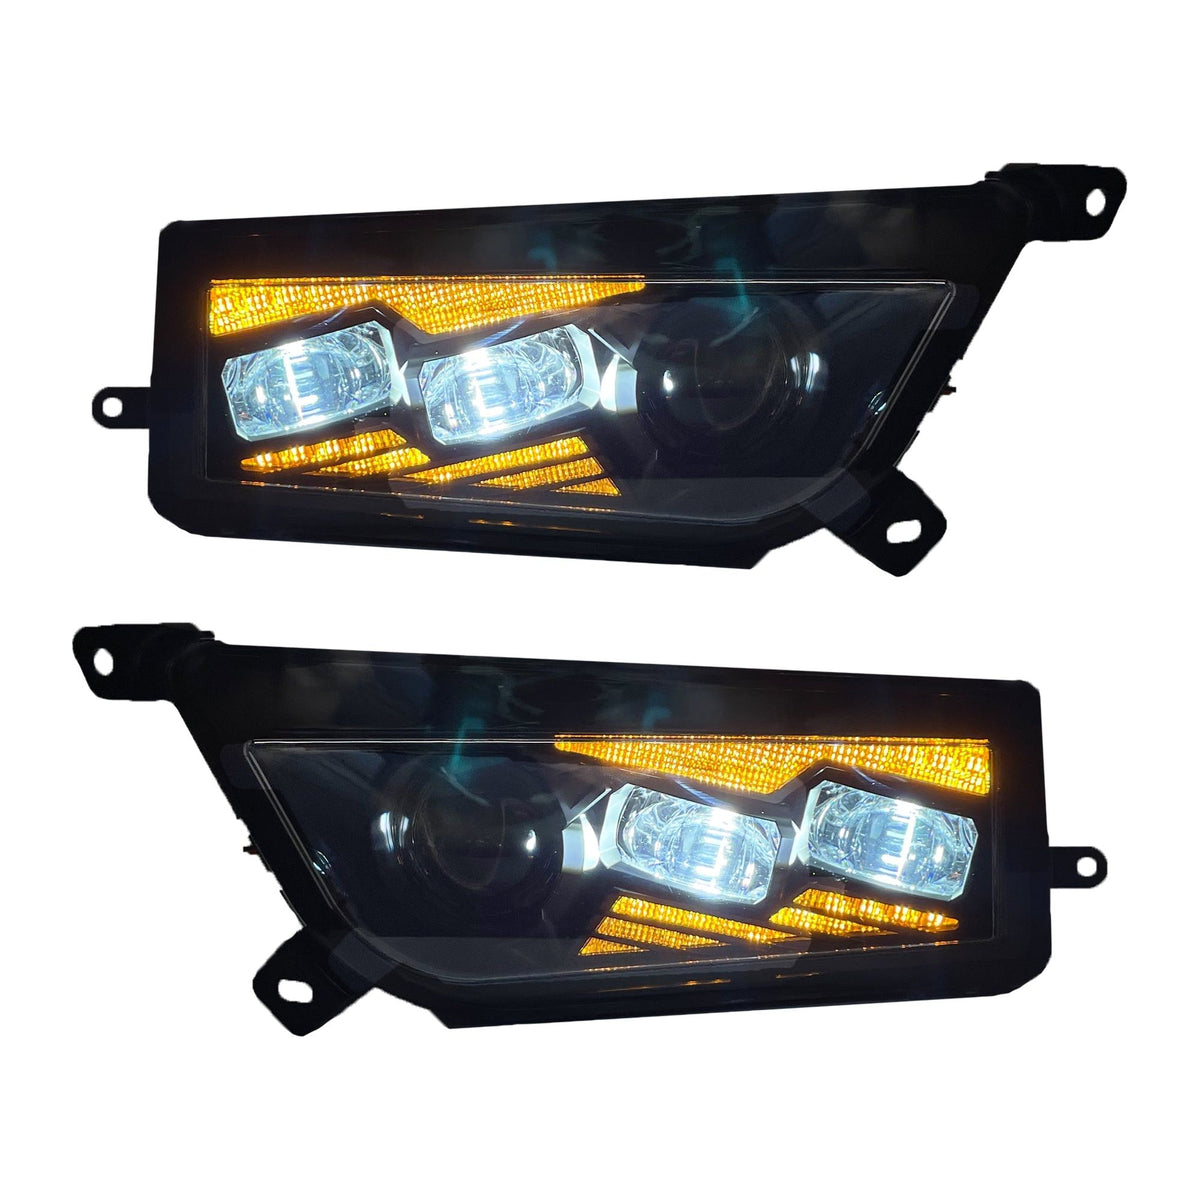 Polaris General / RZR Replacement Headlights | WD Electronics